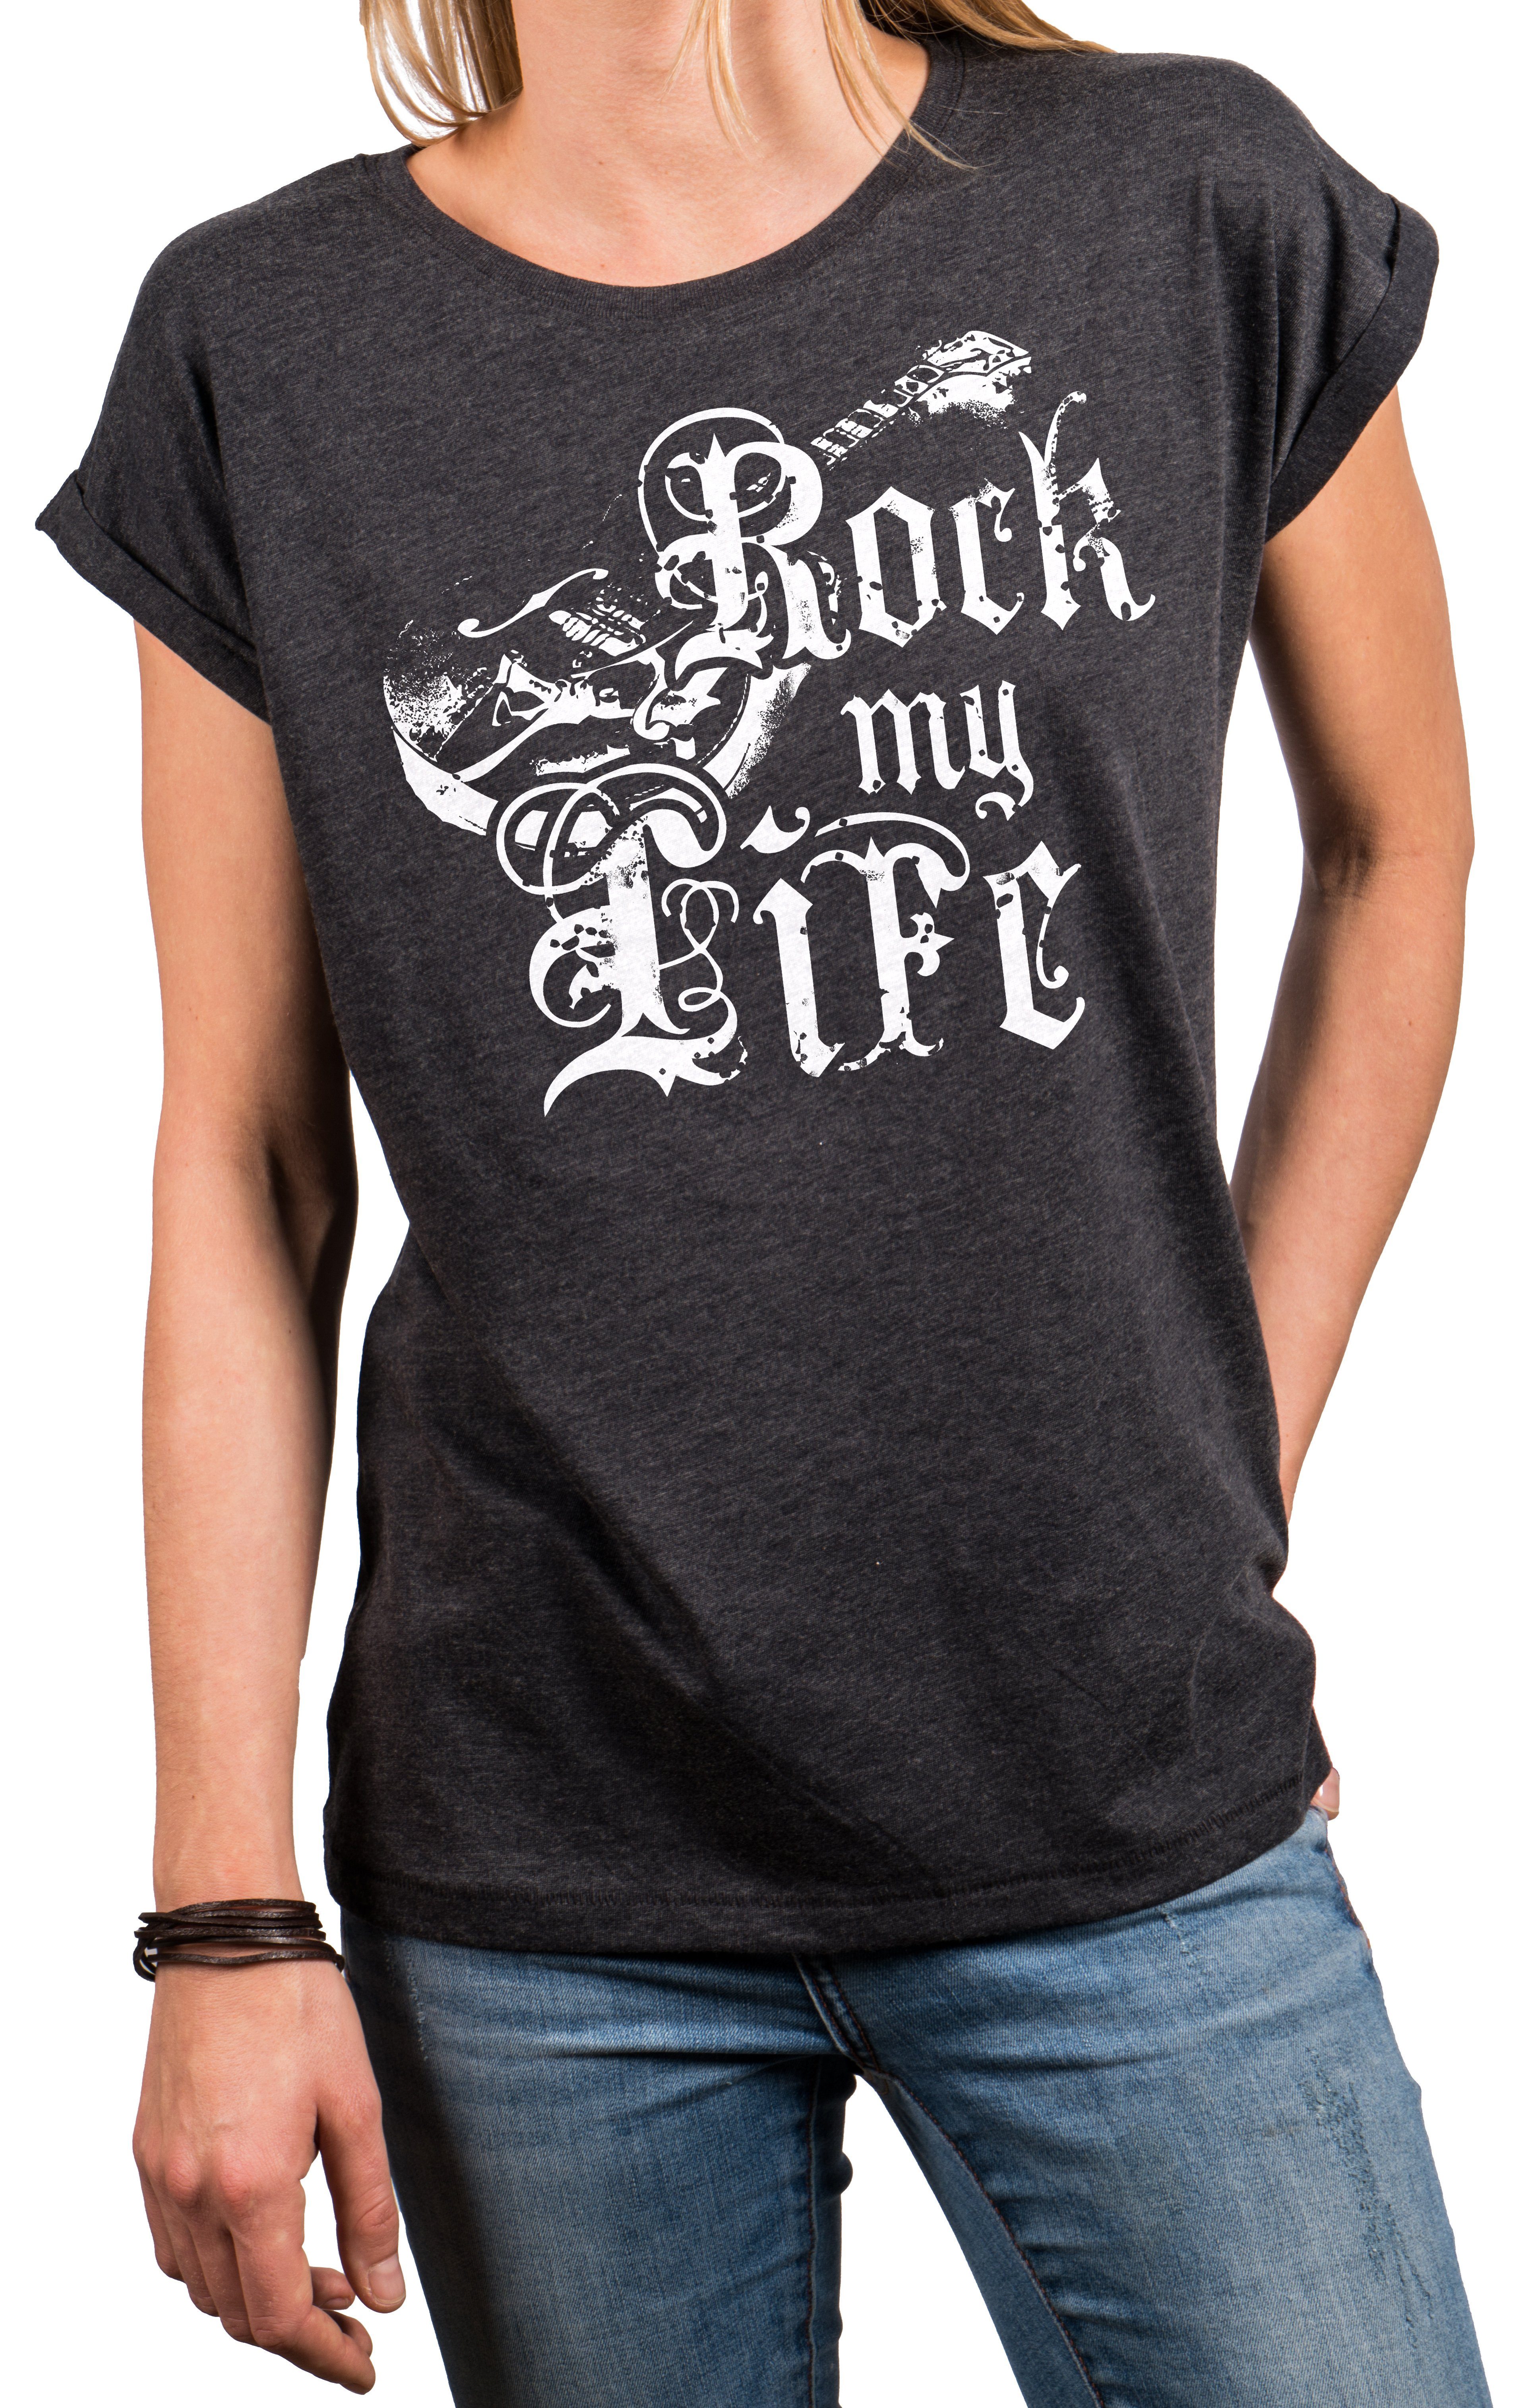 MAKAYA Print-Shirt Ausgefallene T-Shirts Damen lässige Oberteile Top Gitarrenmotiv Tunika (Rock Band Motiv, schwarz, grau, rosa, blau) Baumwolle, große Größen